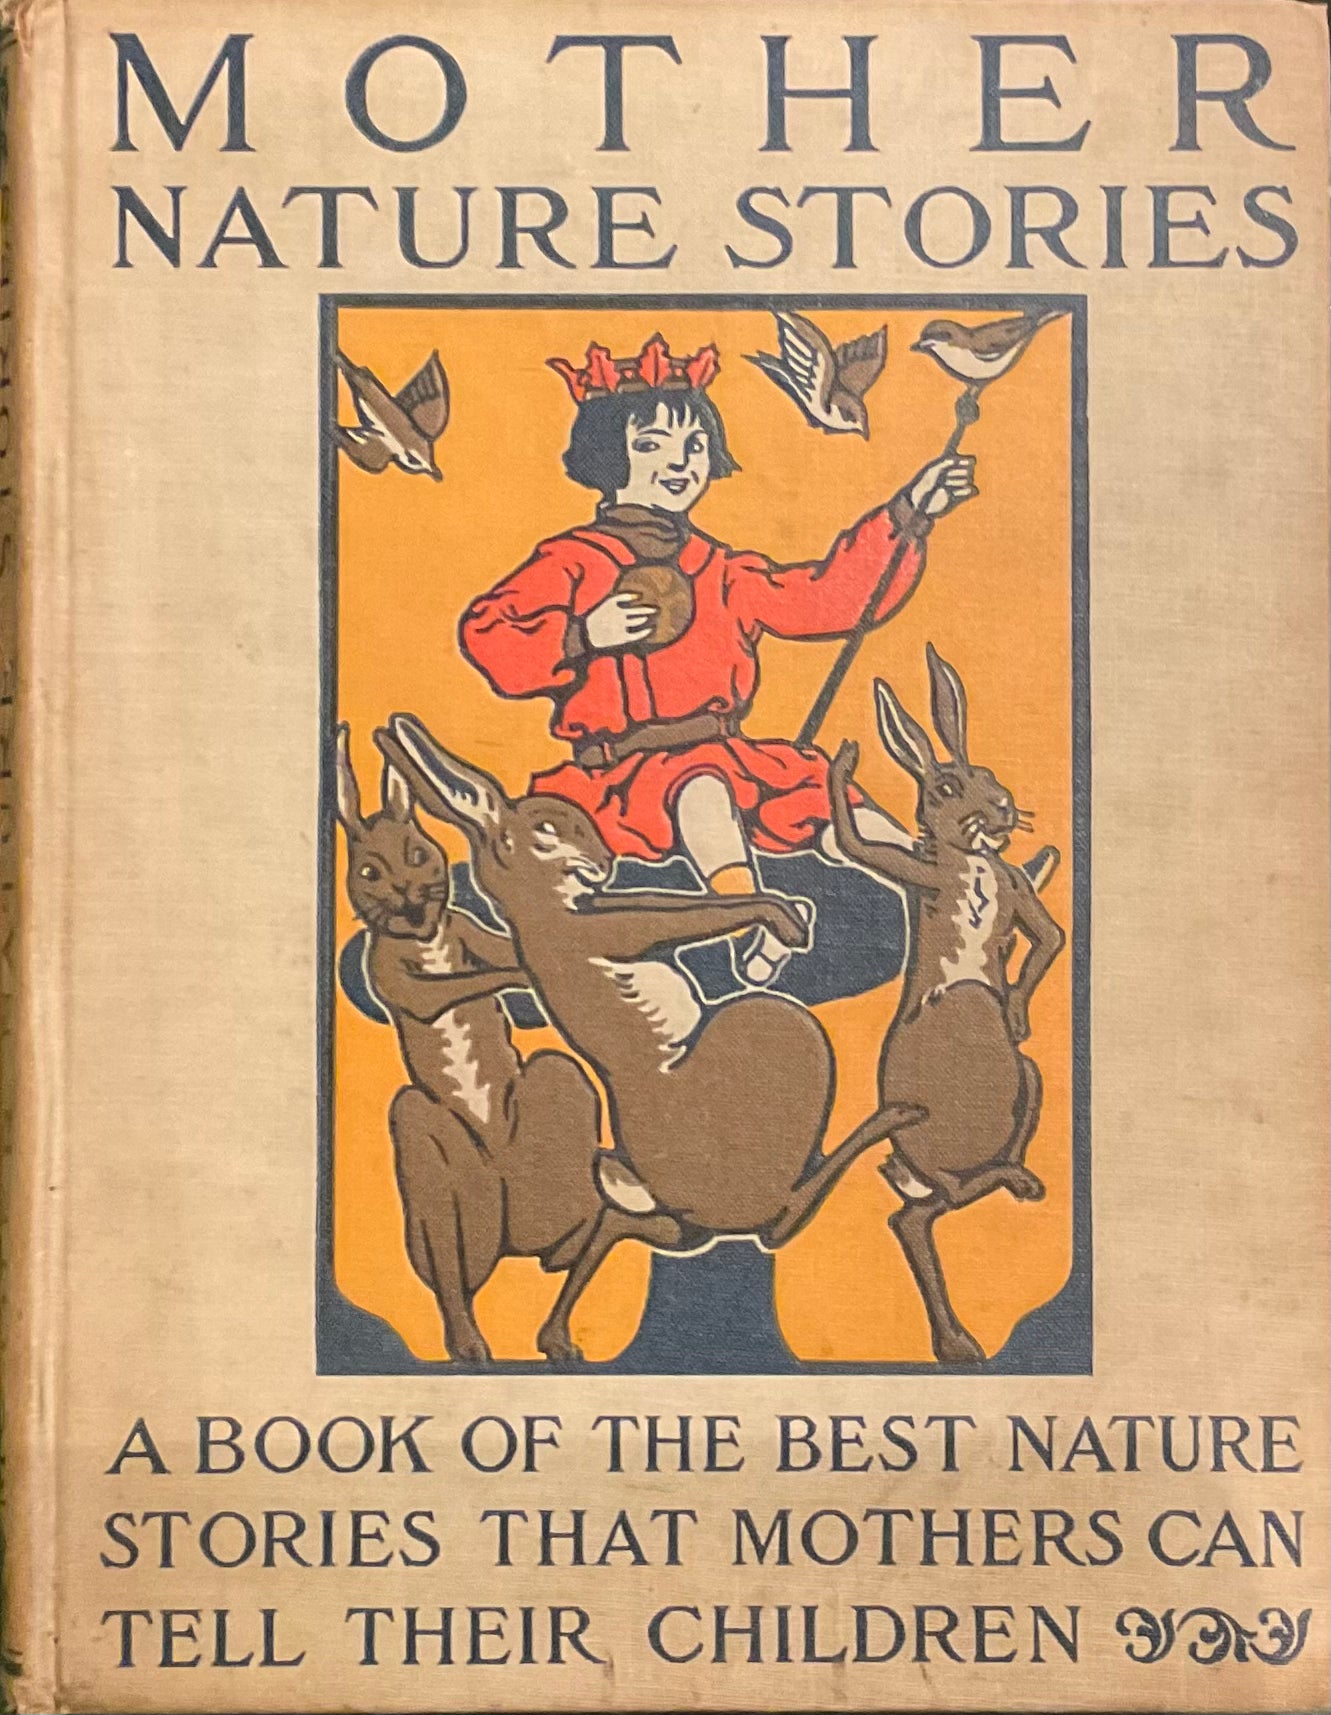 Mother Nature Stories, Howard E. Altemus